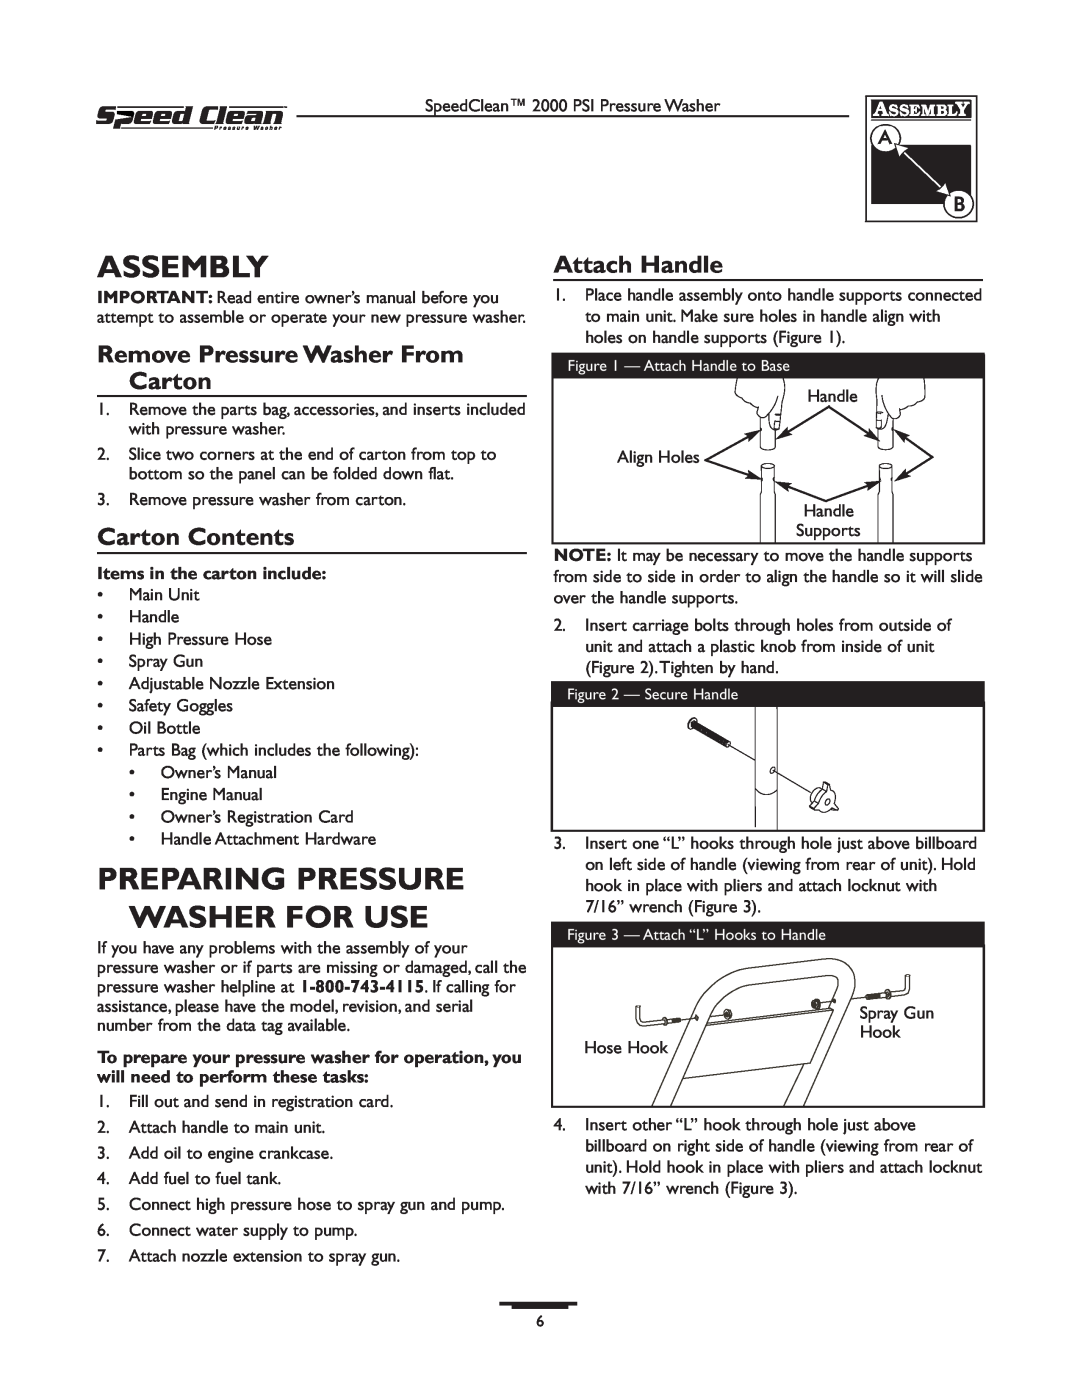 Briggs & Stratton 020211-0 Assembly, Preparing Pressure Washer For Use, Remove Pressure Washer From Carton, Attach Handle 